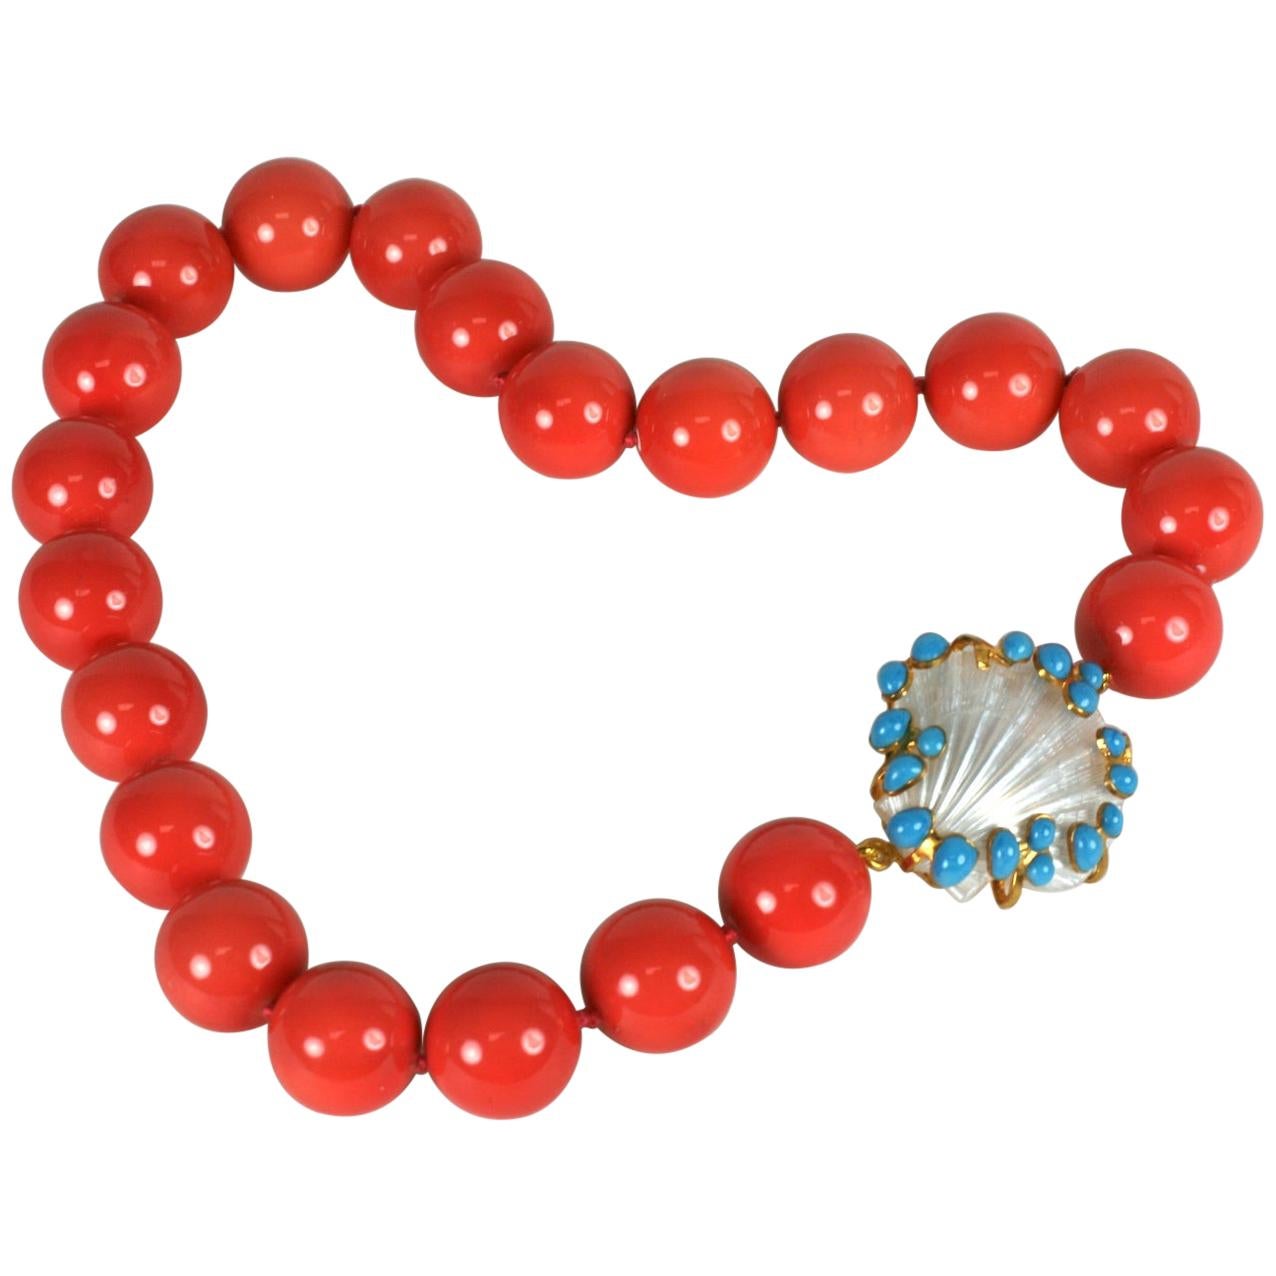 MWLC Coral Palm Beach Beads